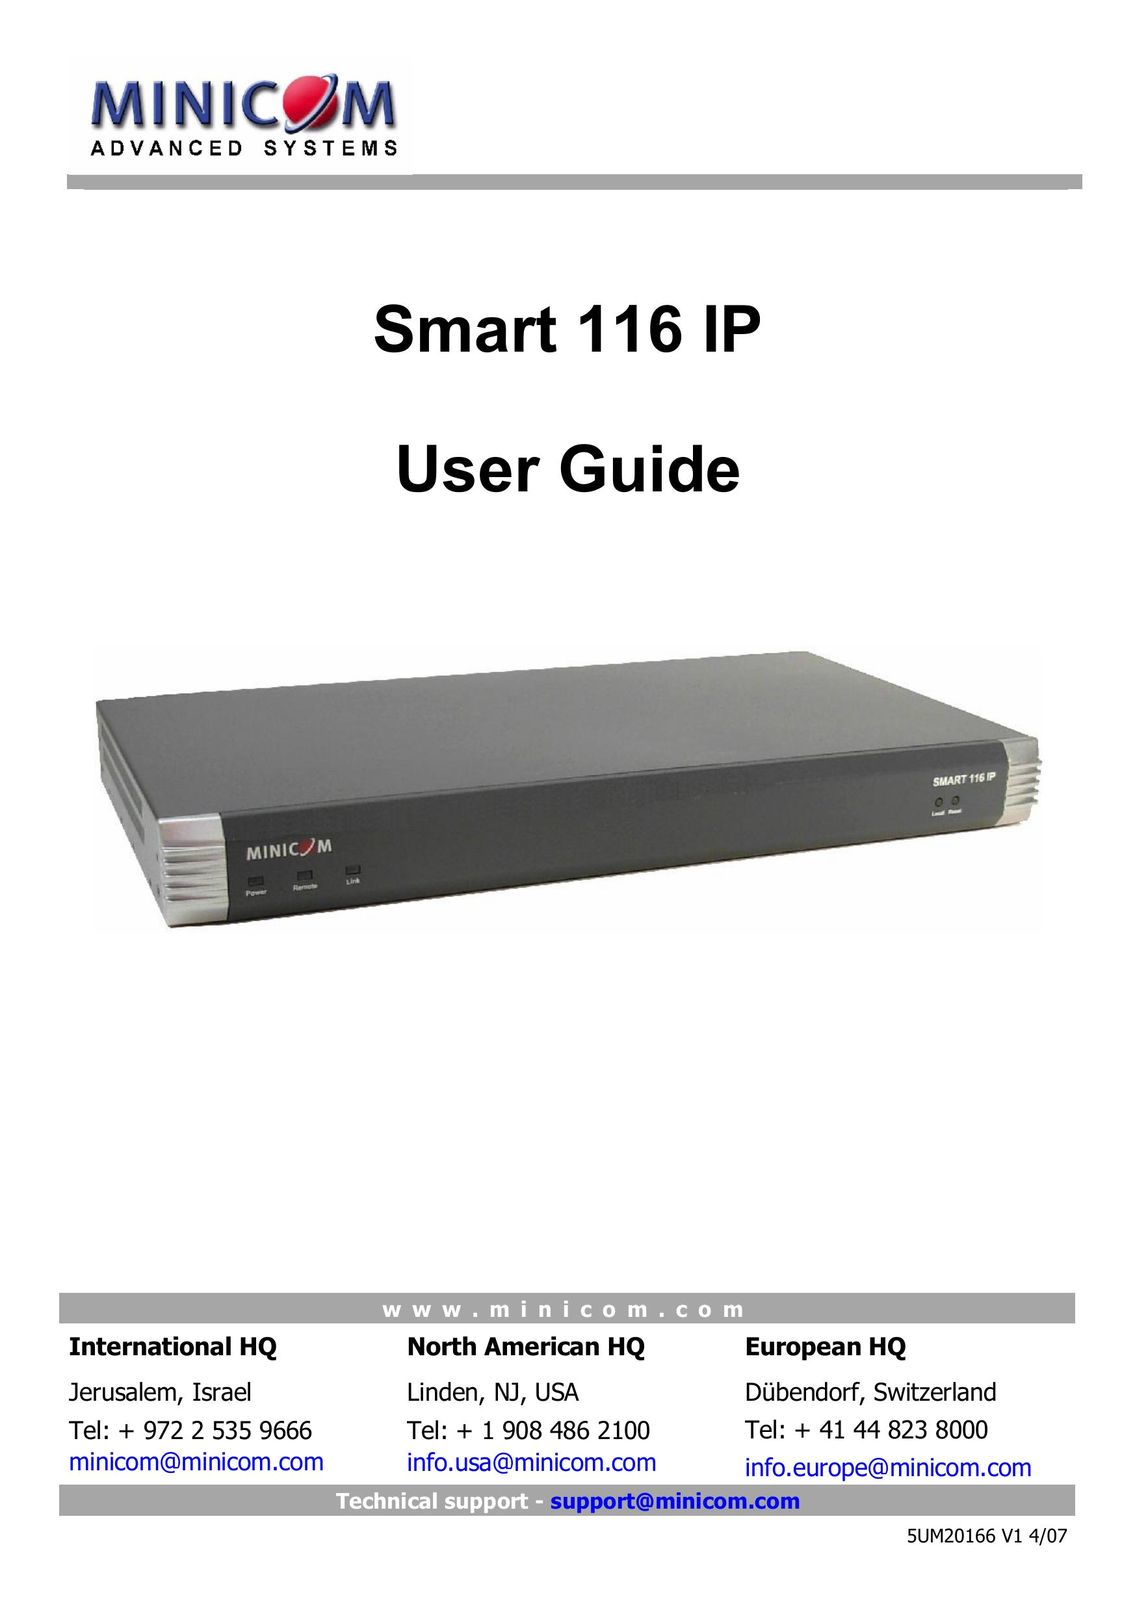 Minicom Advanced Systems 116 IP Network Card User Manual